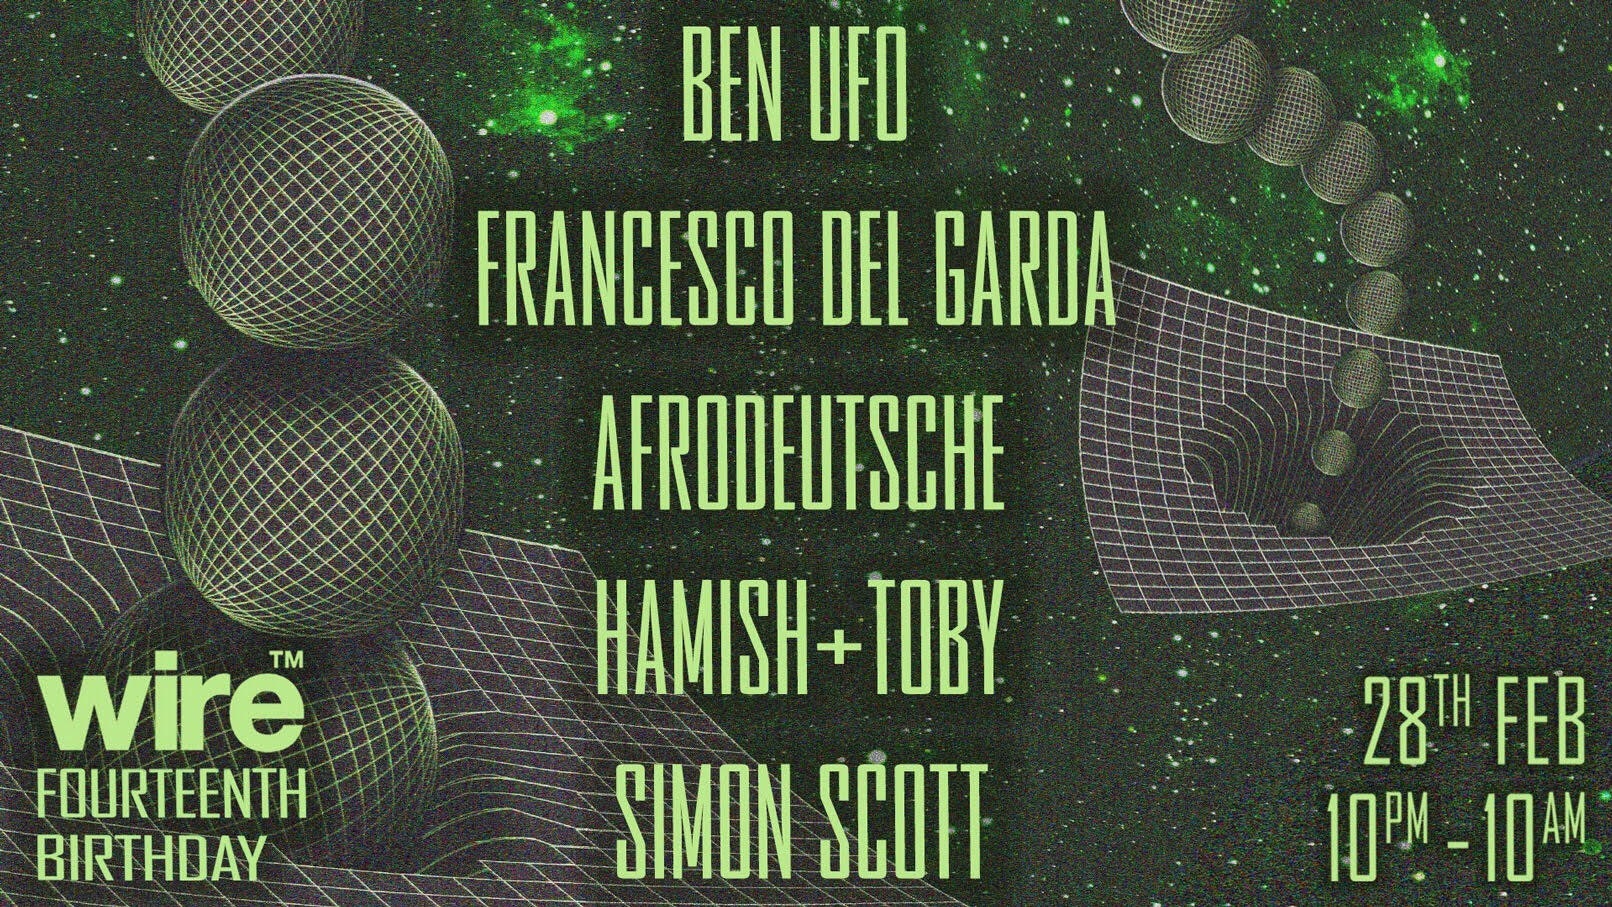 Wire’s 14th Birthday: Ben UFO, Francesco Del Garda + more